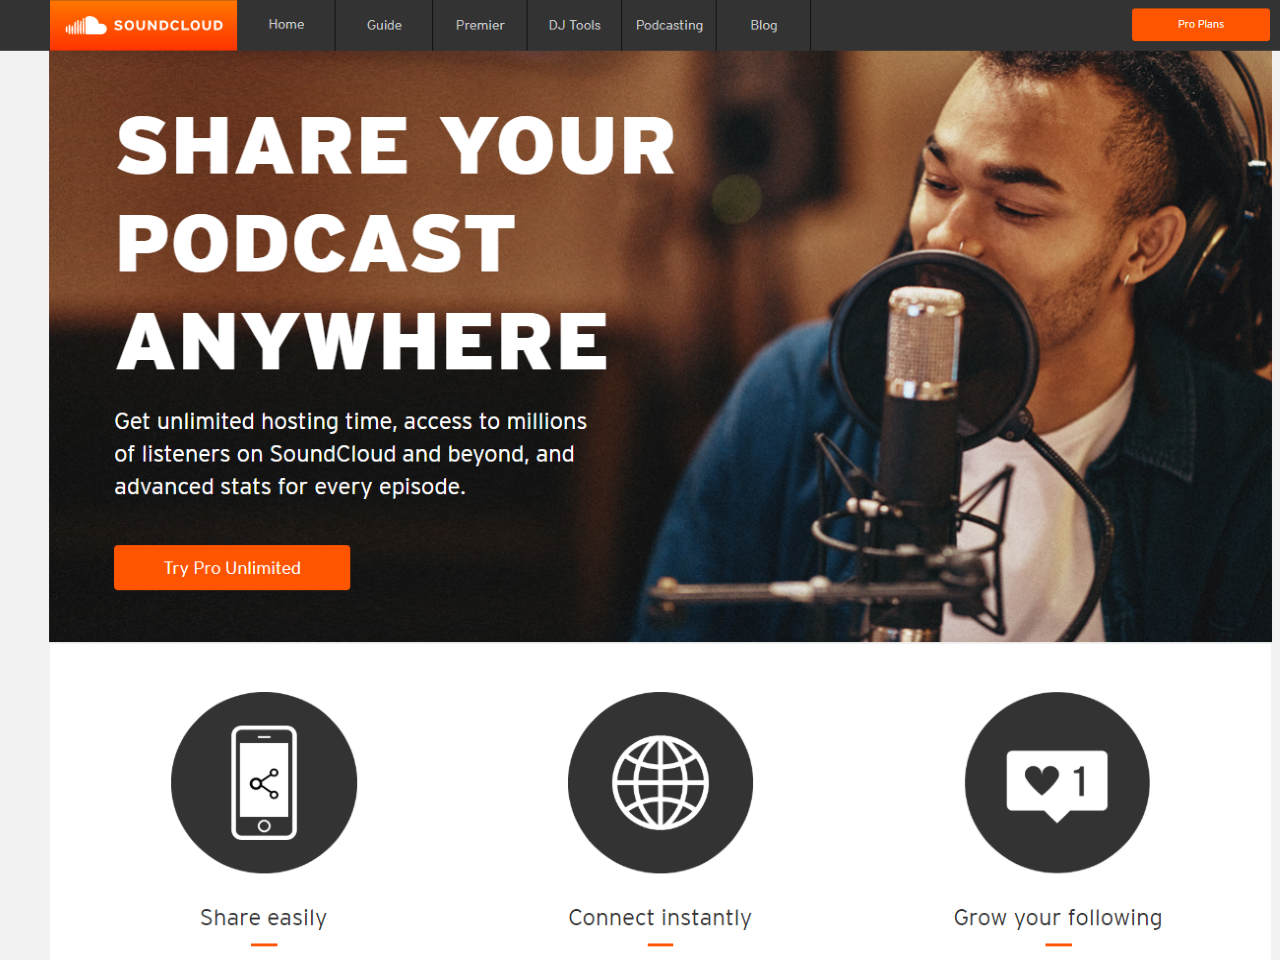 Podcast hosting on soundcloud